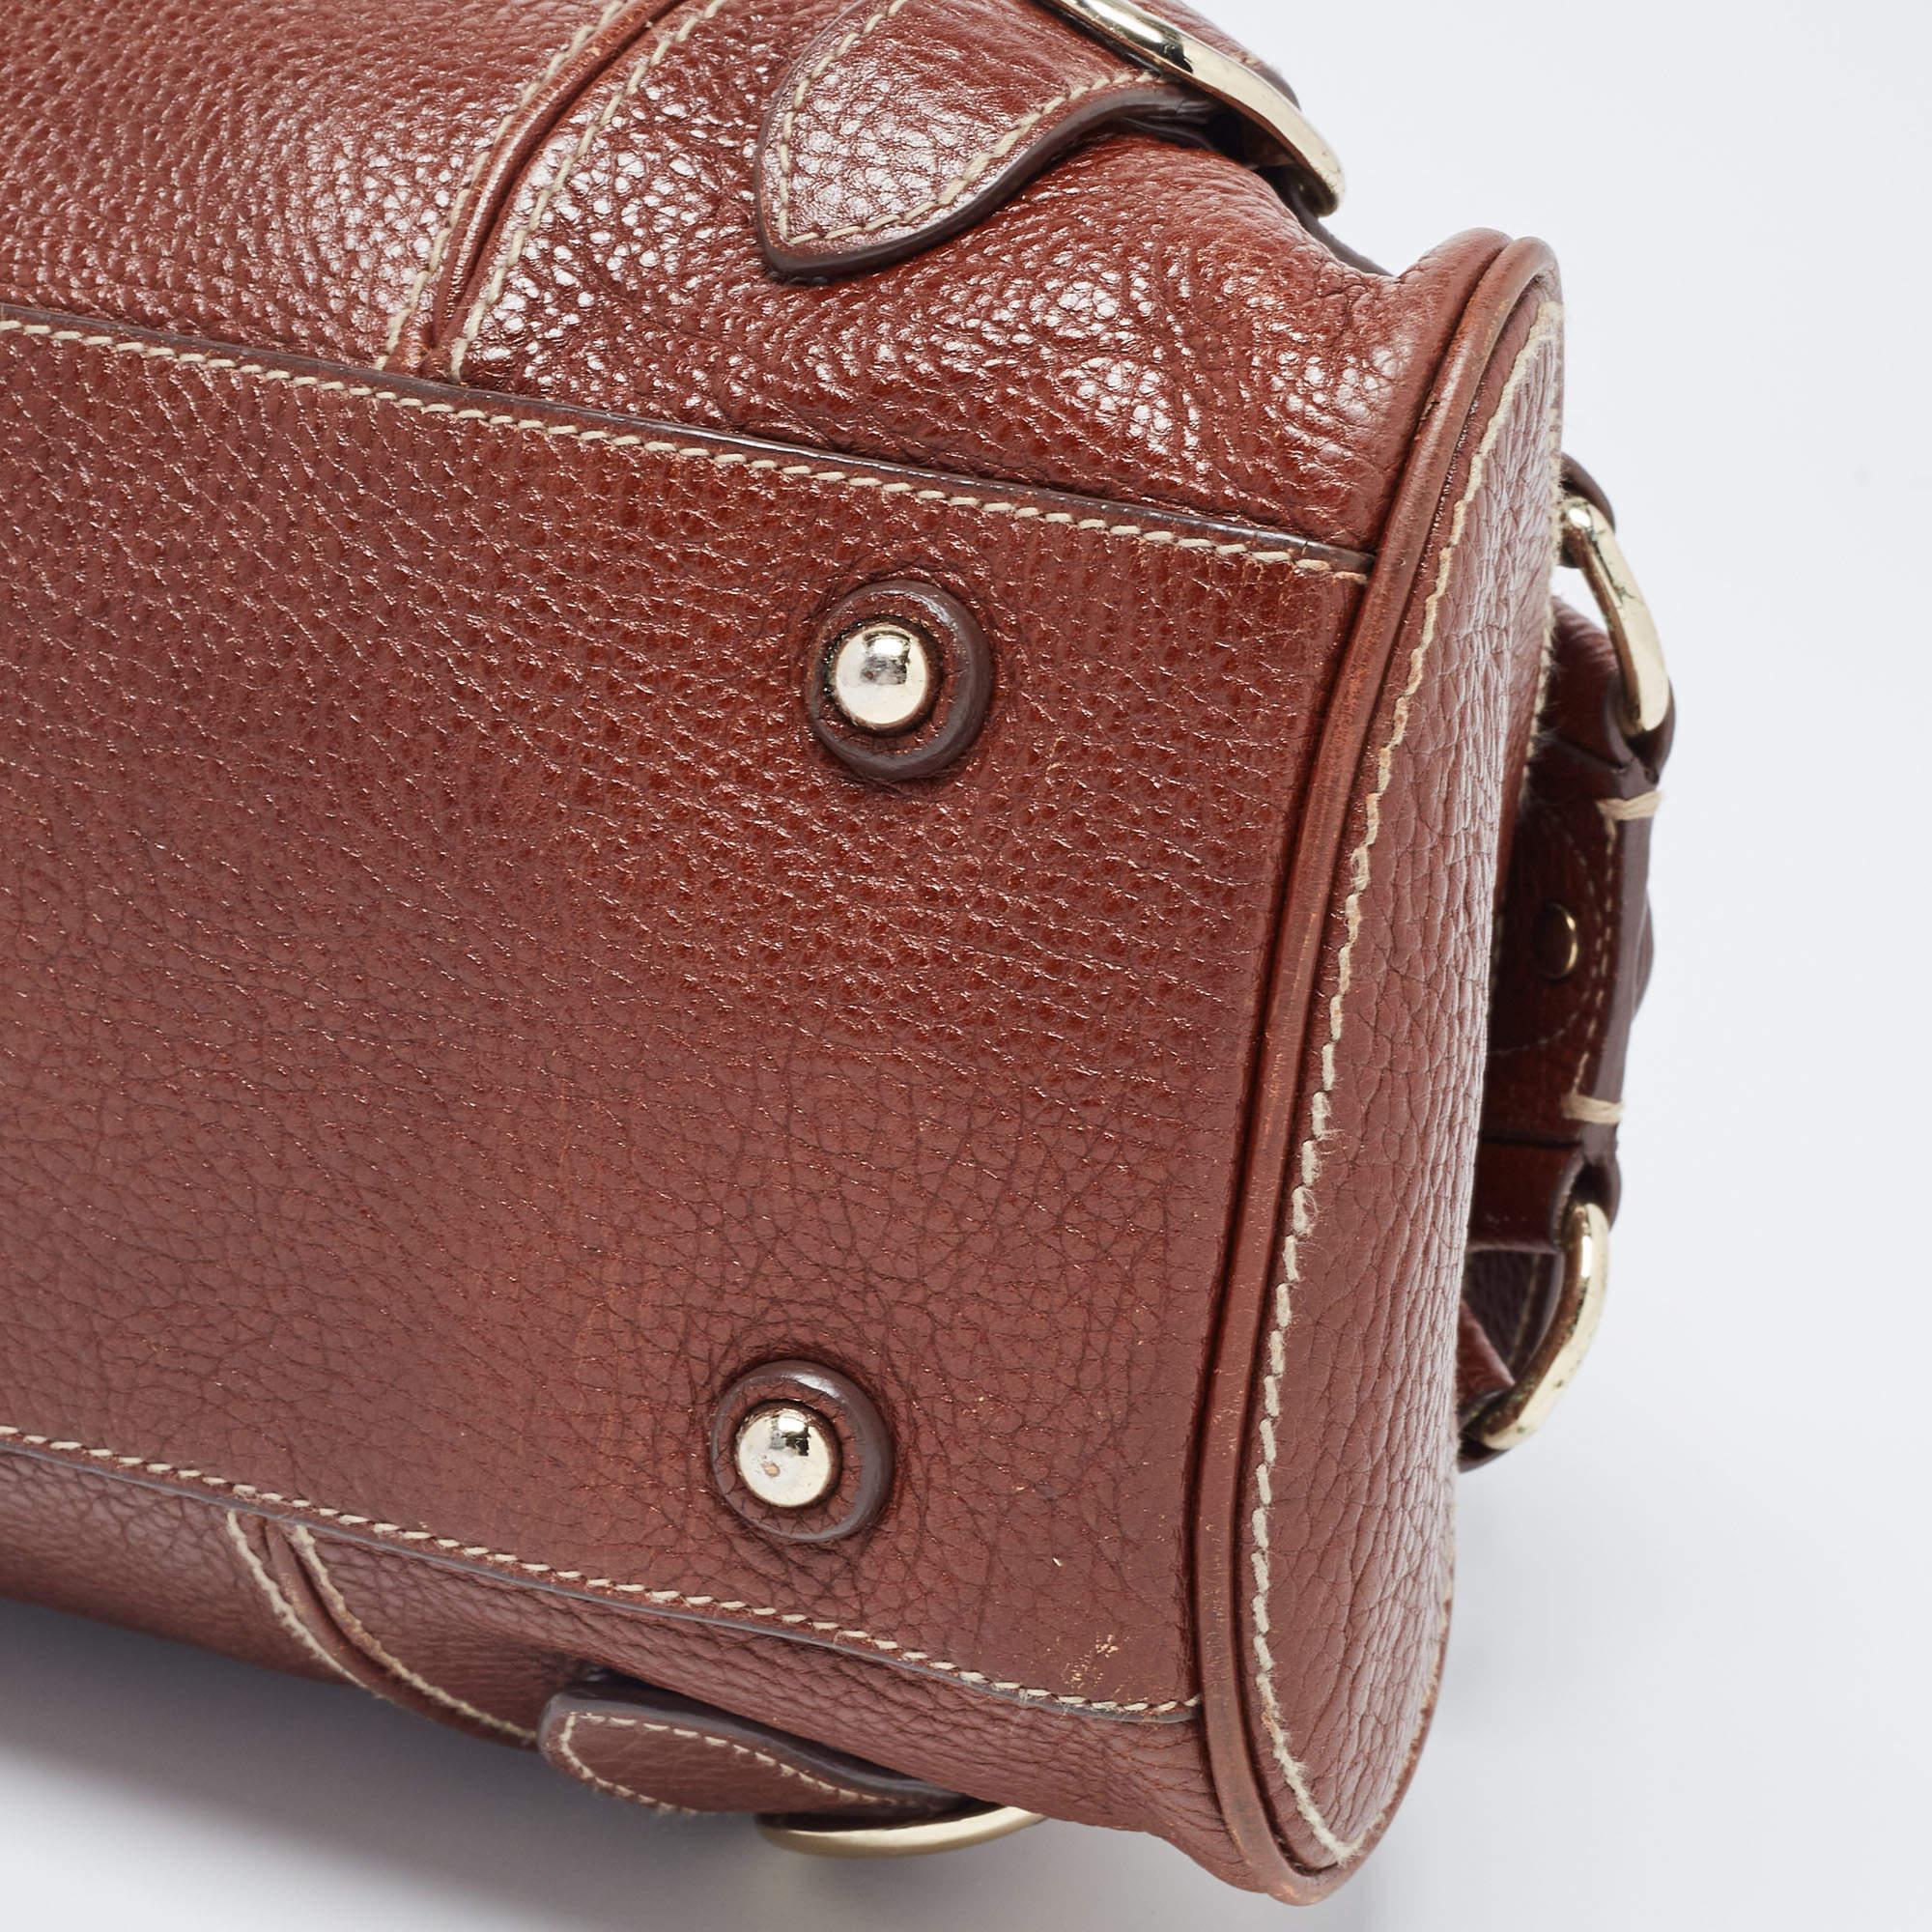 Burberry Brown Leather Bowler Bag 2